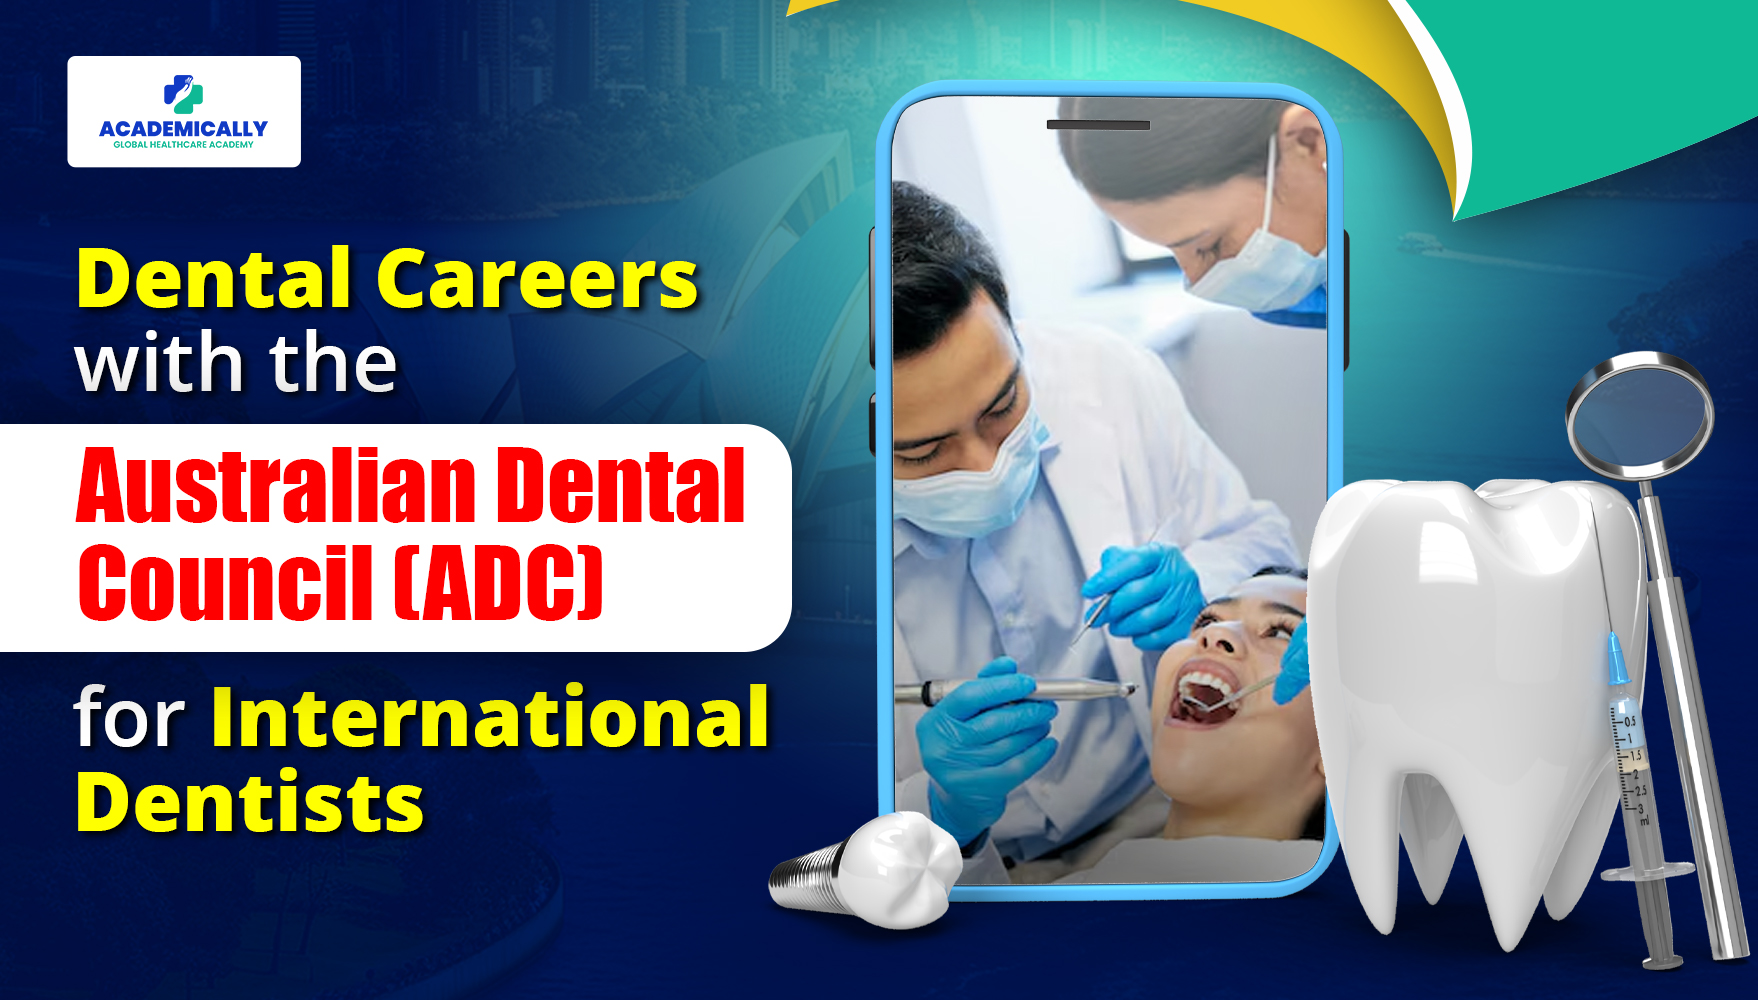 Australian Dental Council (ADC) for International Dentists